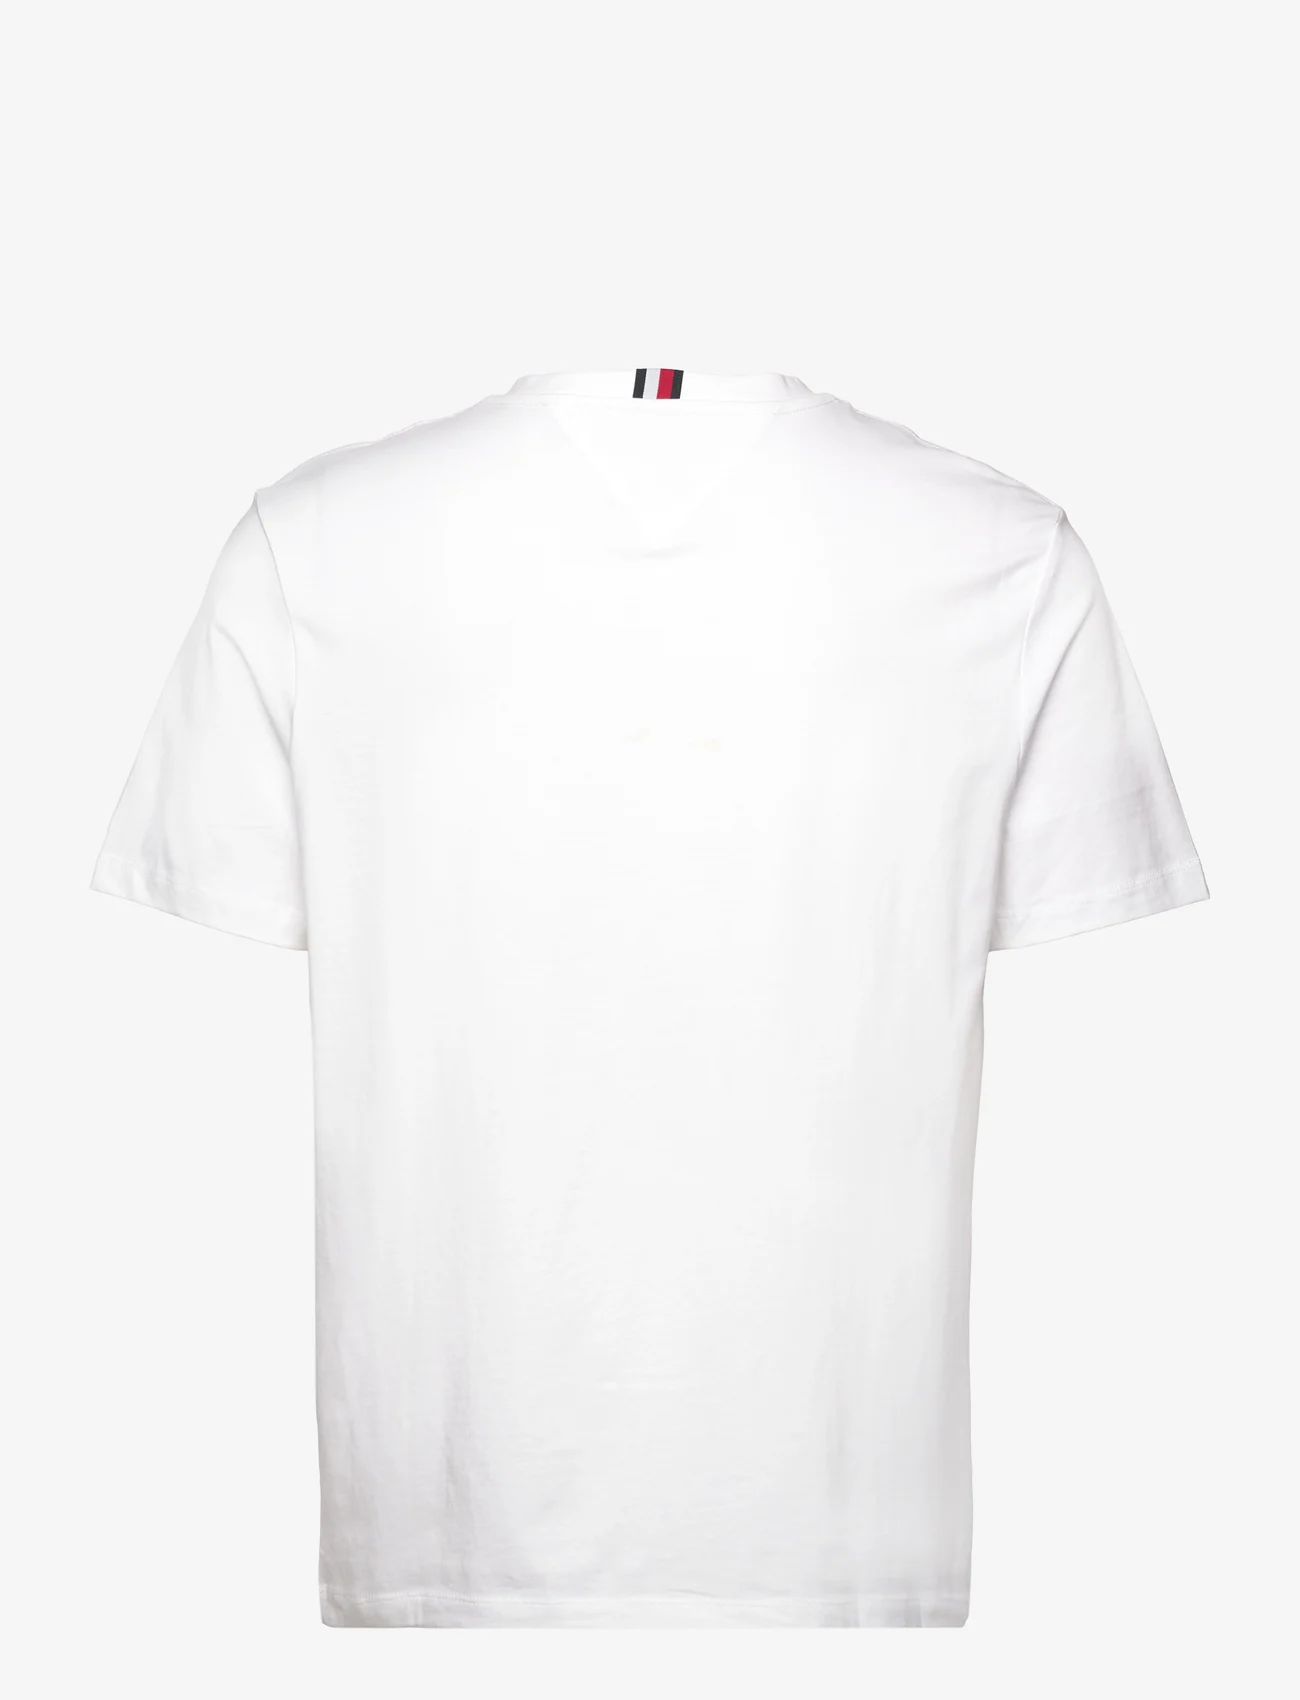 Tommy Hilfiger - MONOTYPE POCKET TEE - basic t-shirts - white - 1